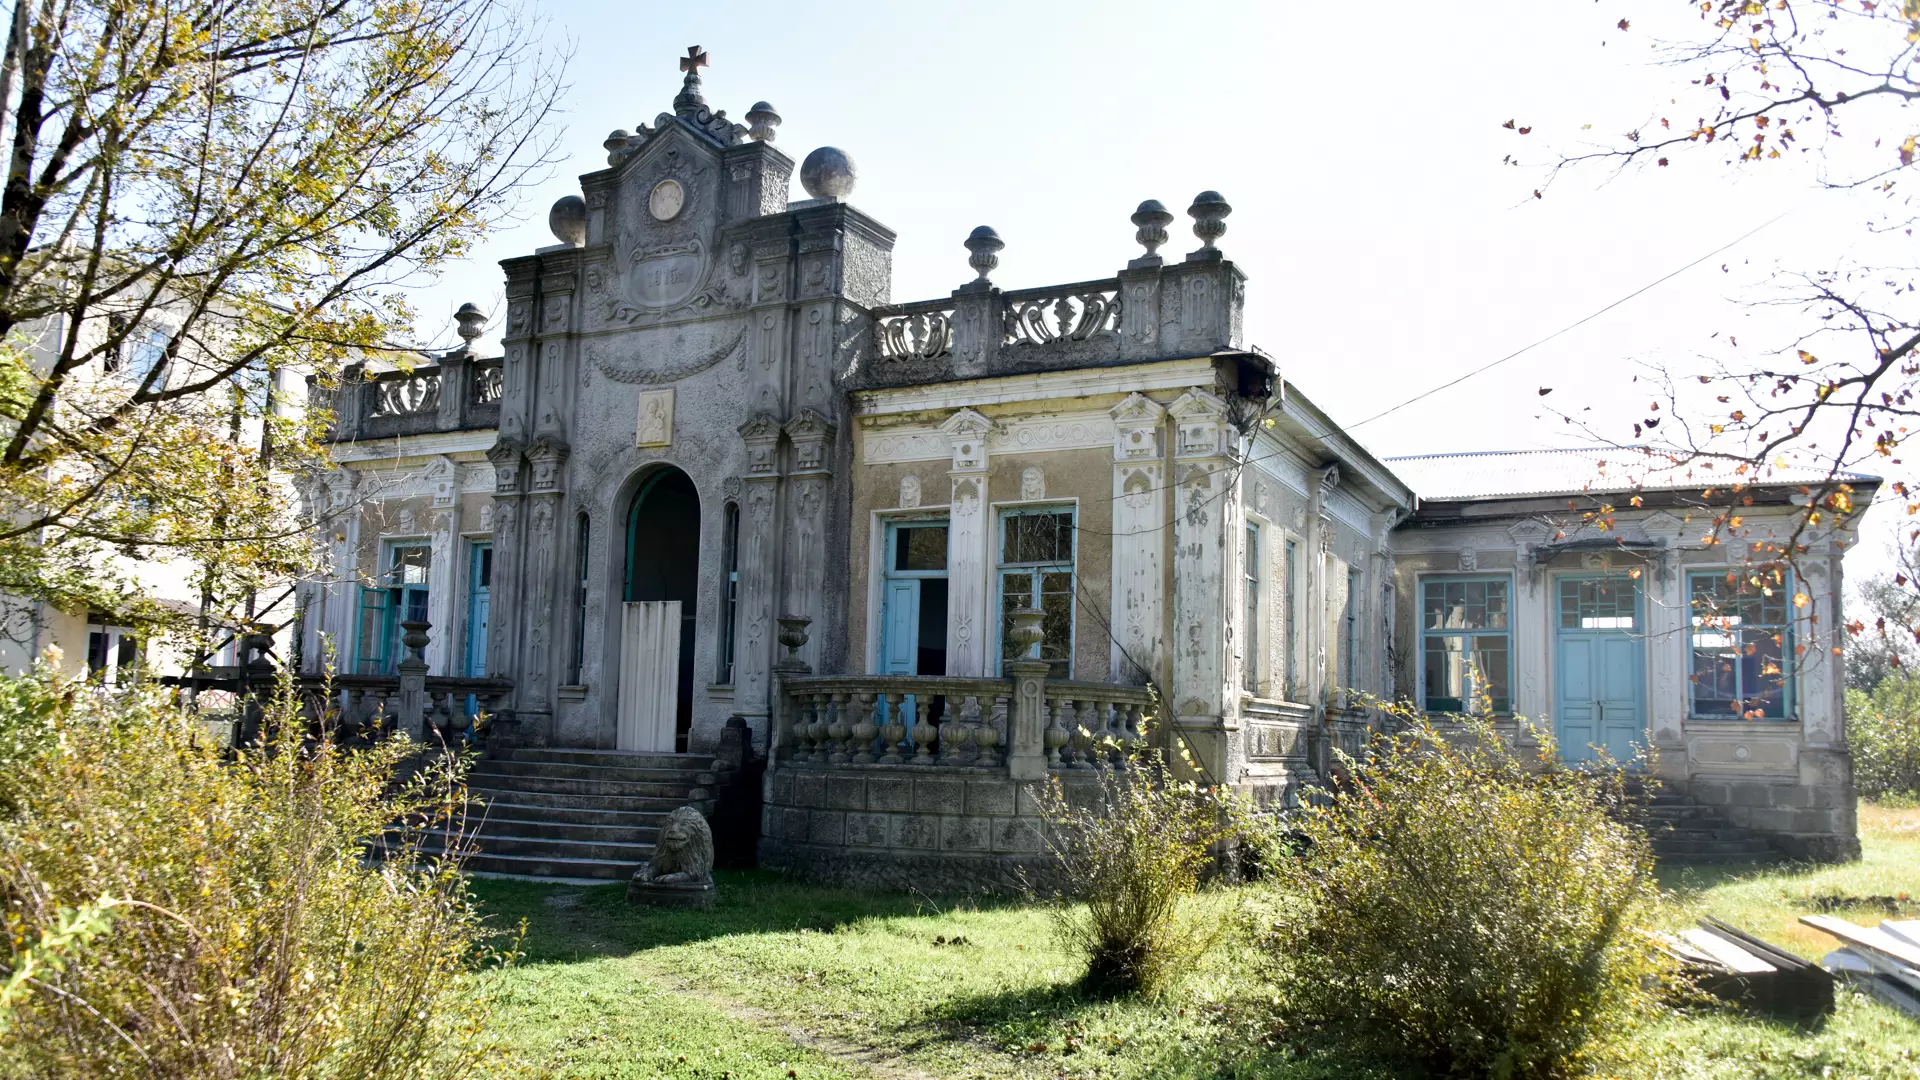 Khoshtaria Palace in Sujuna - Italian Renaissance Architecture in Georgia